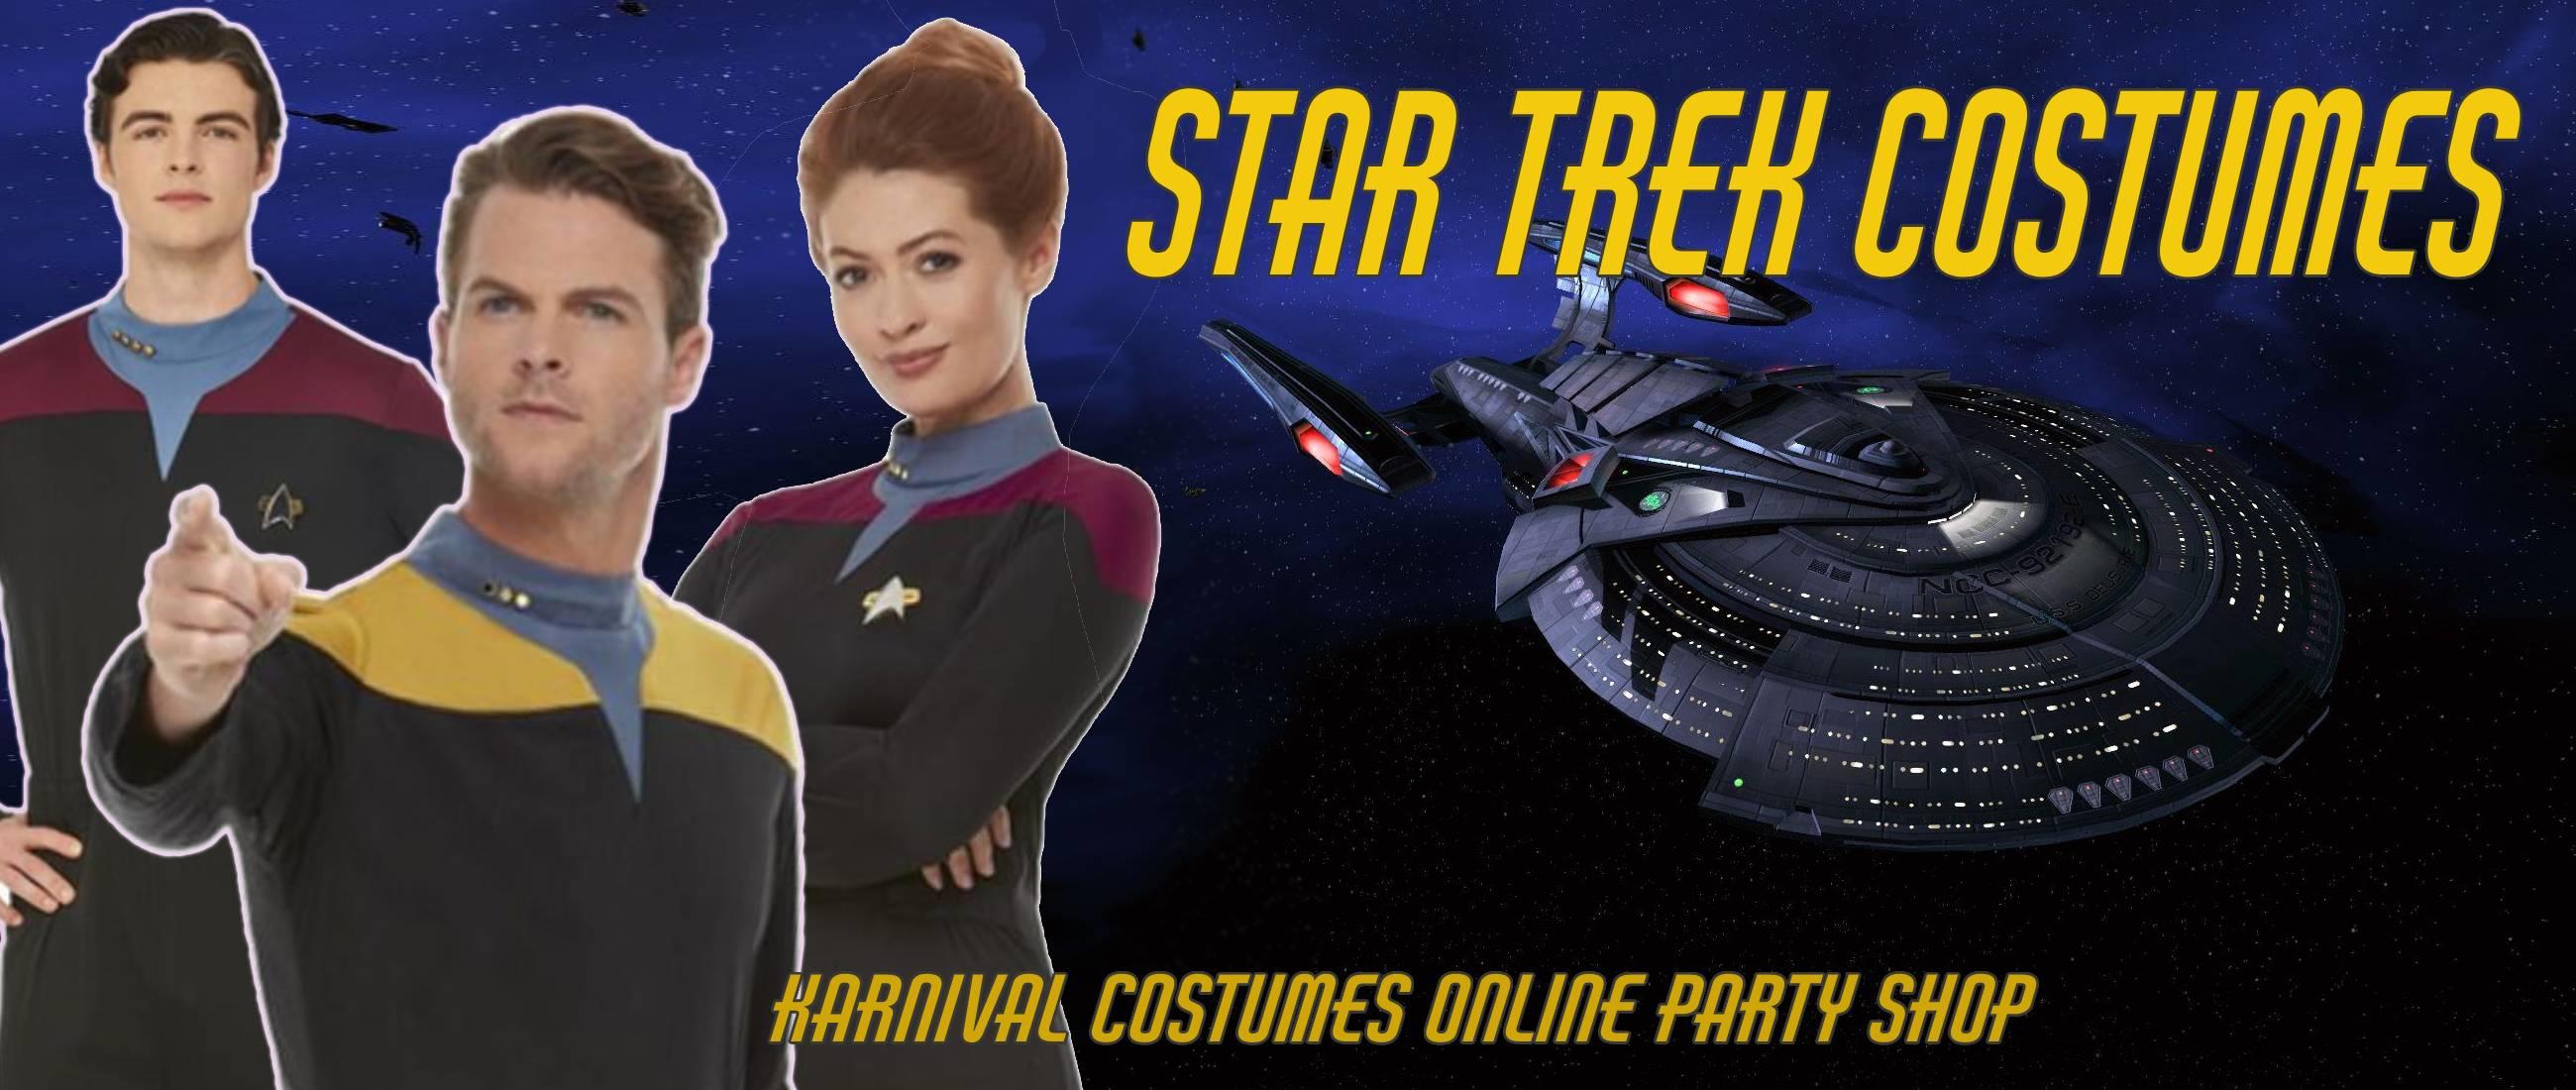 NEW Star Trek Costumes